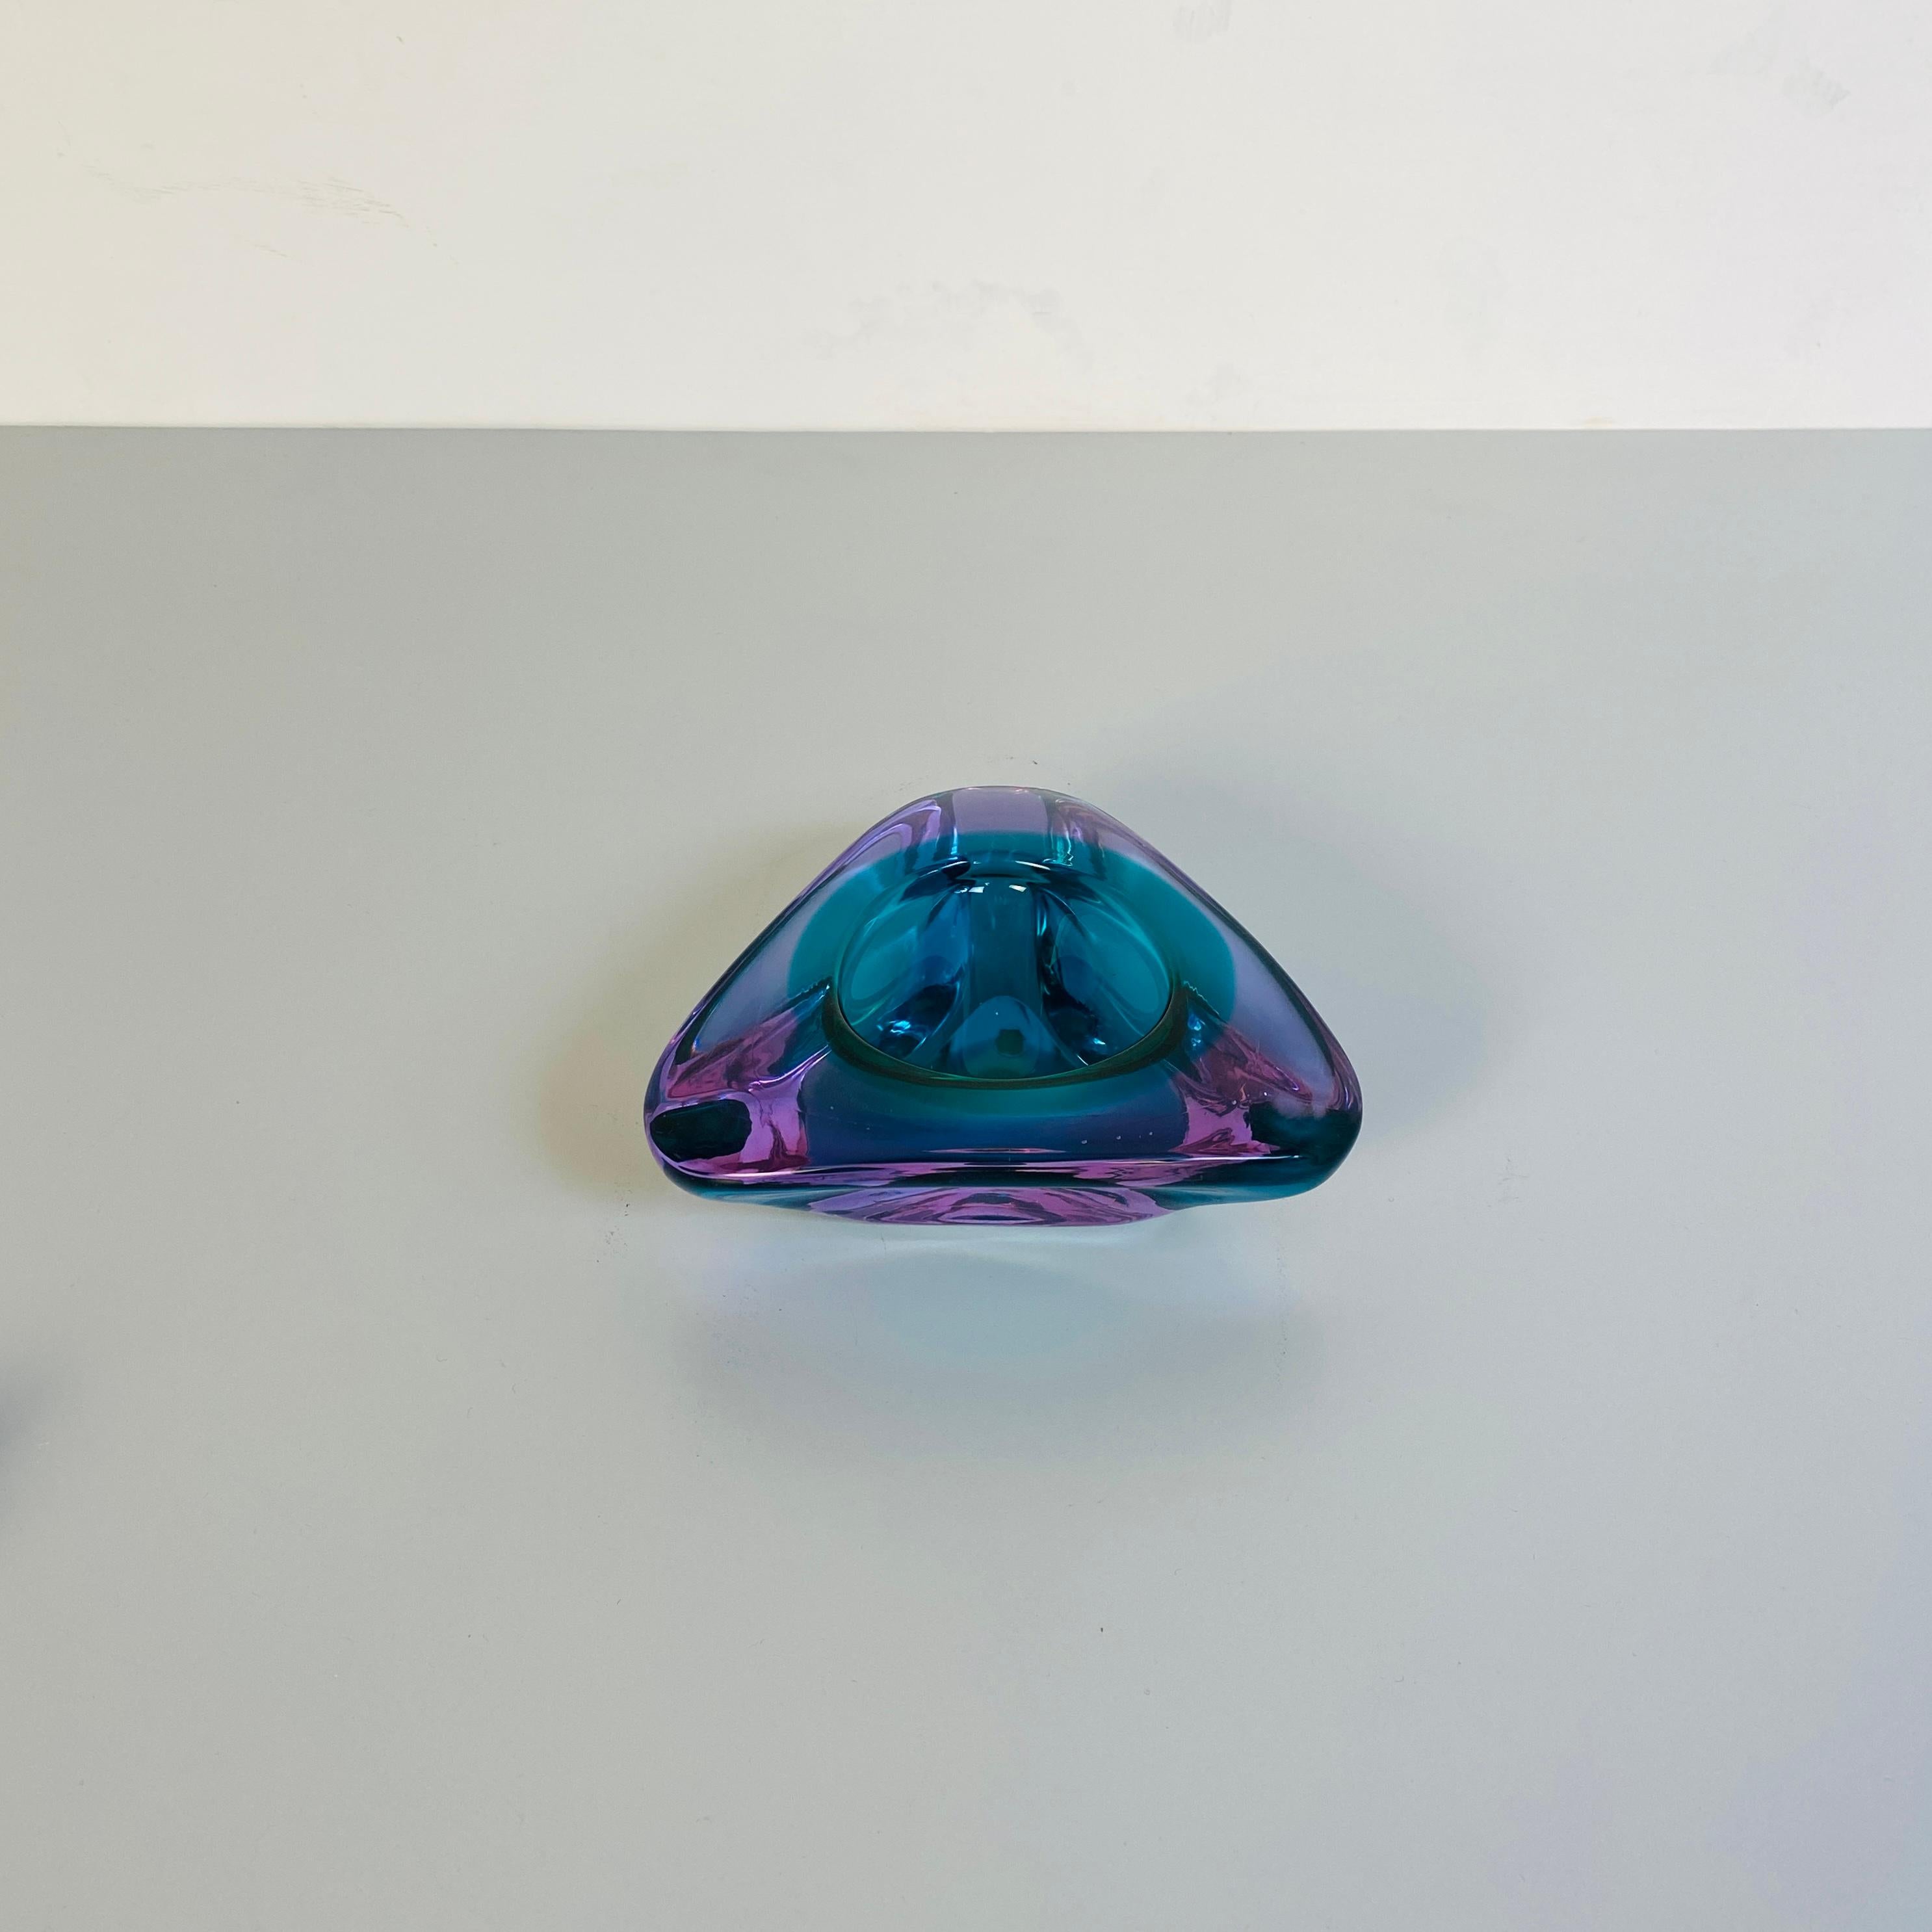 Italian Mid-Century Modern triangular Murano glass ashtray in purple, 1970s
Triangular shaped ashtray in Murano glass with rounded corners in purple with shades.

Very good condition

Measures 17 x 15 x 7 H cm.